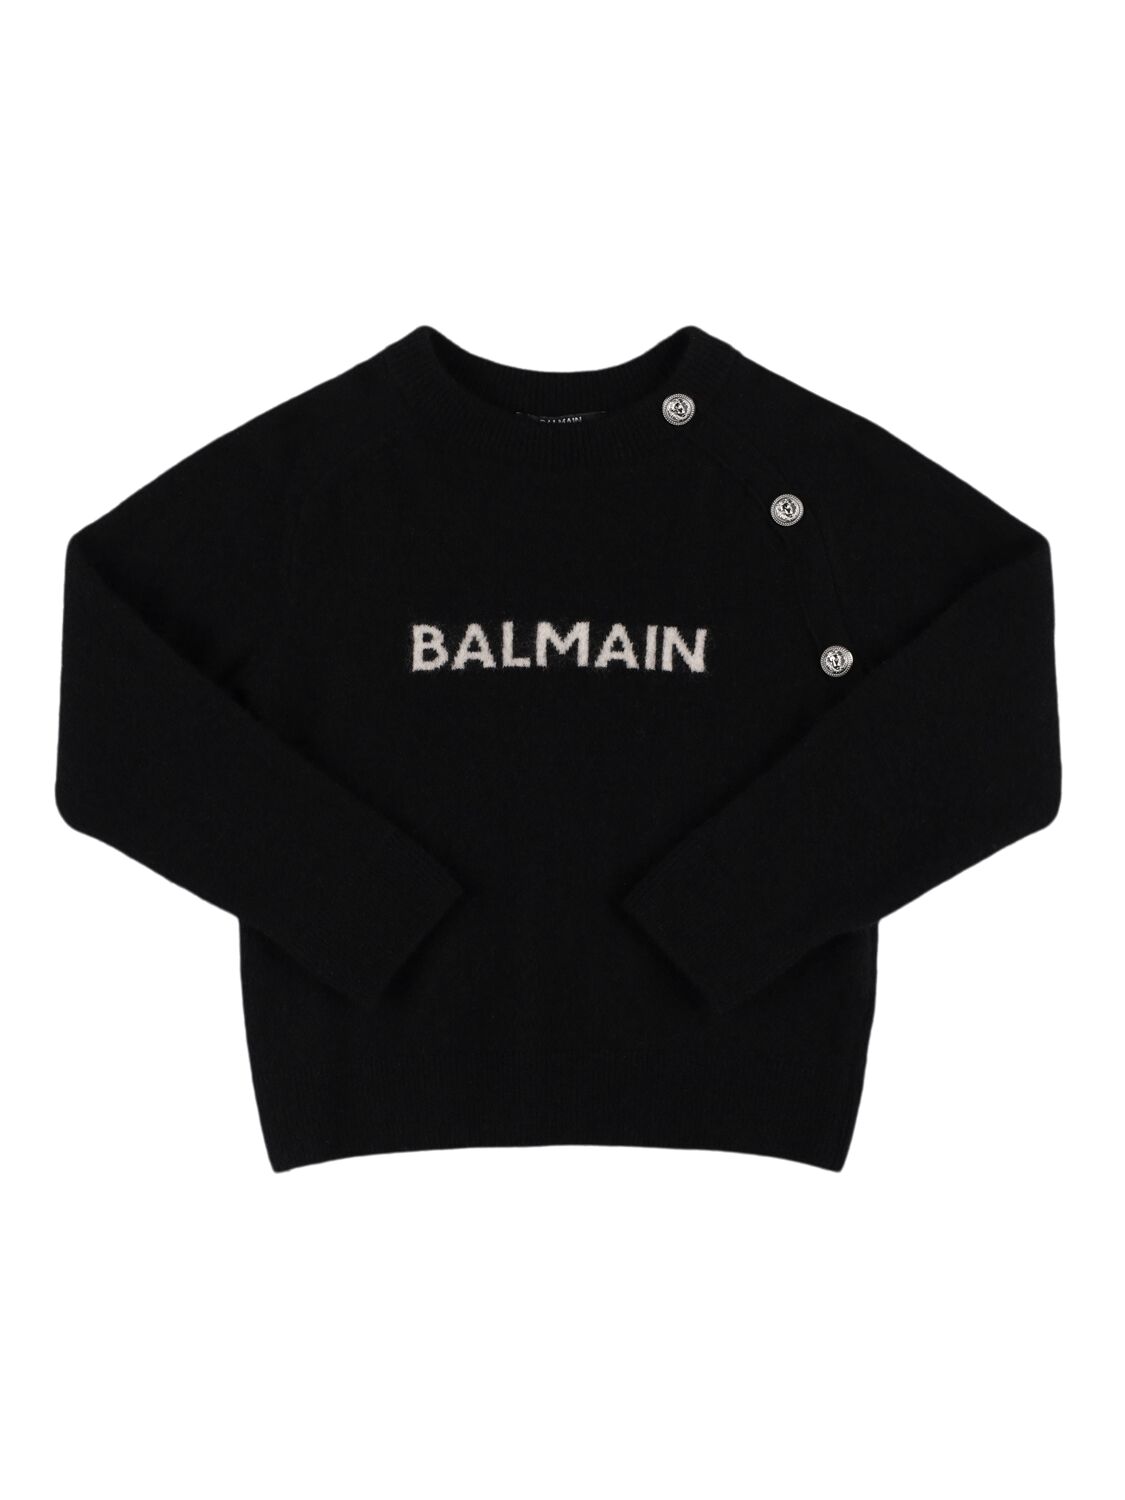 Balmain Logo Wool Blend Knit Sweater In Black/white